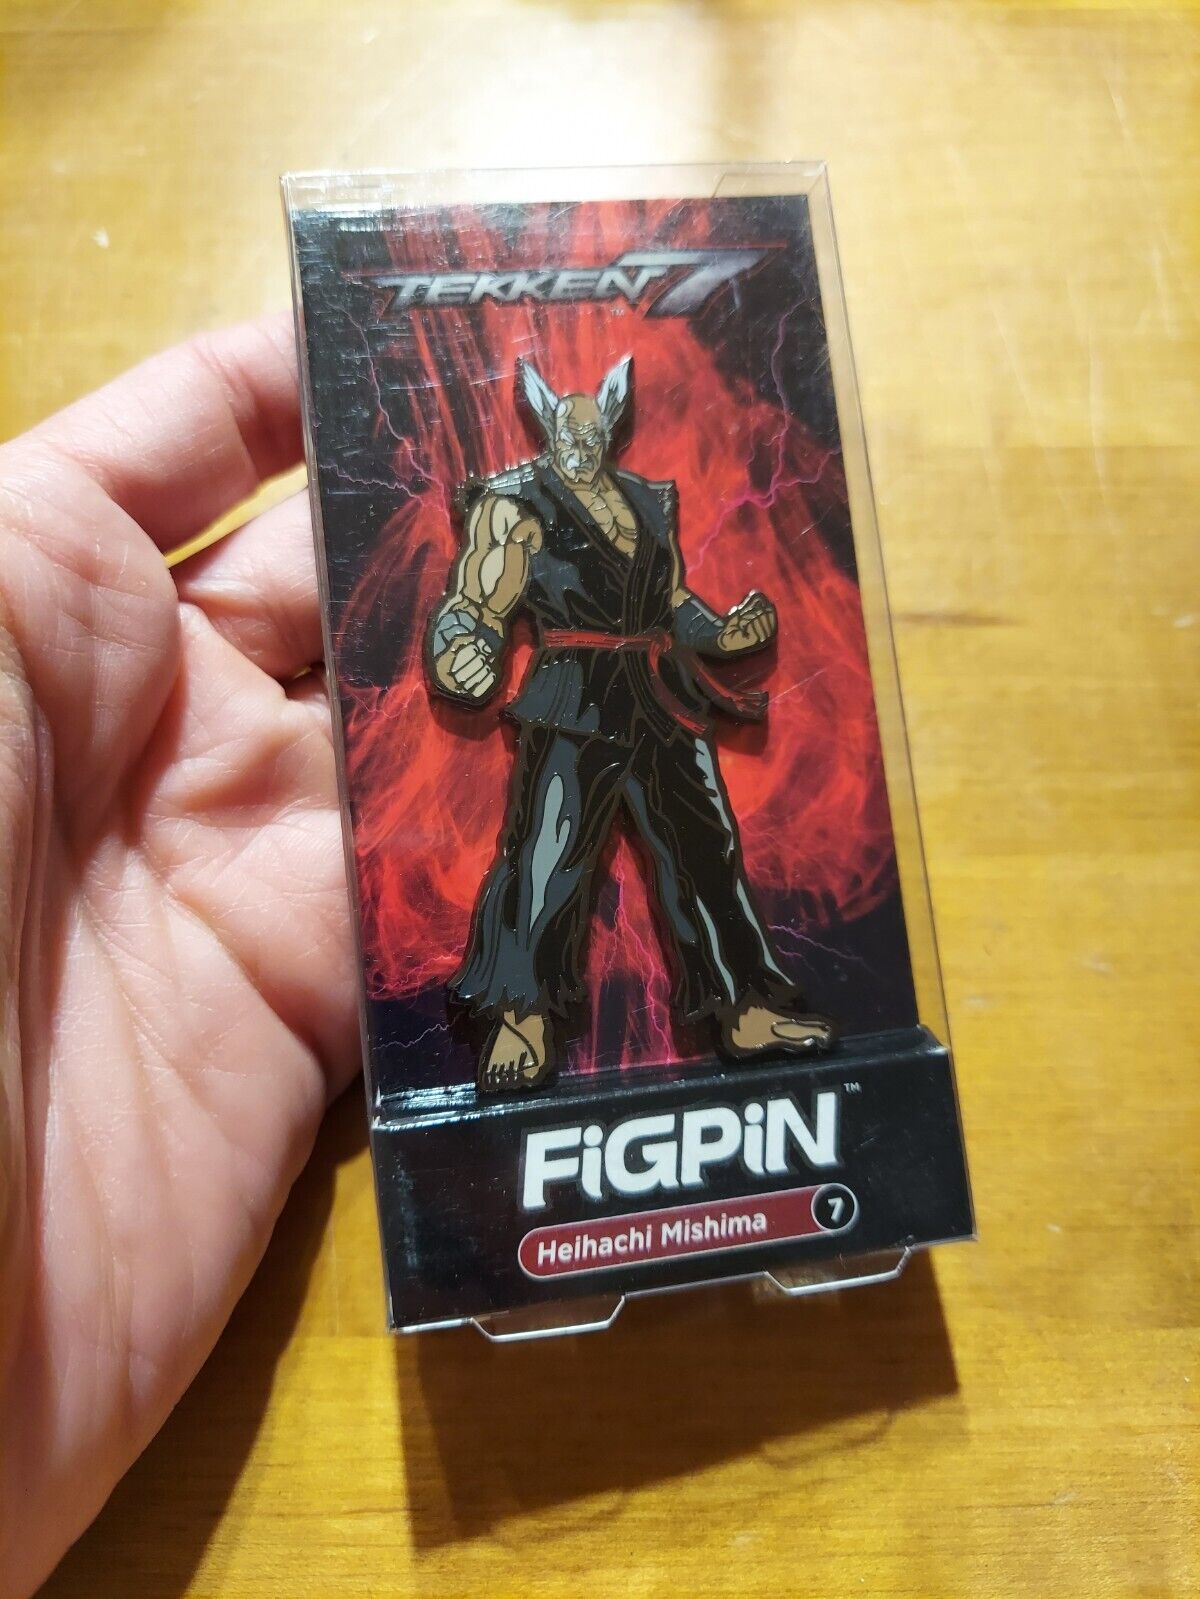 FigPin Fig Pin Tekken 7 Heihachi Mishima #7